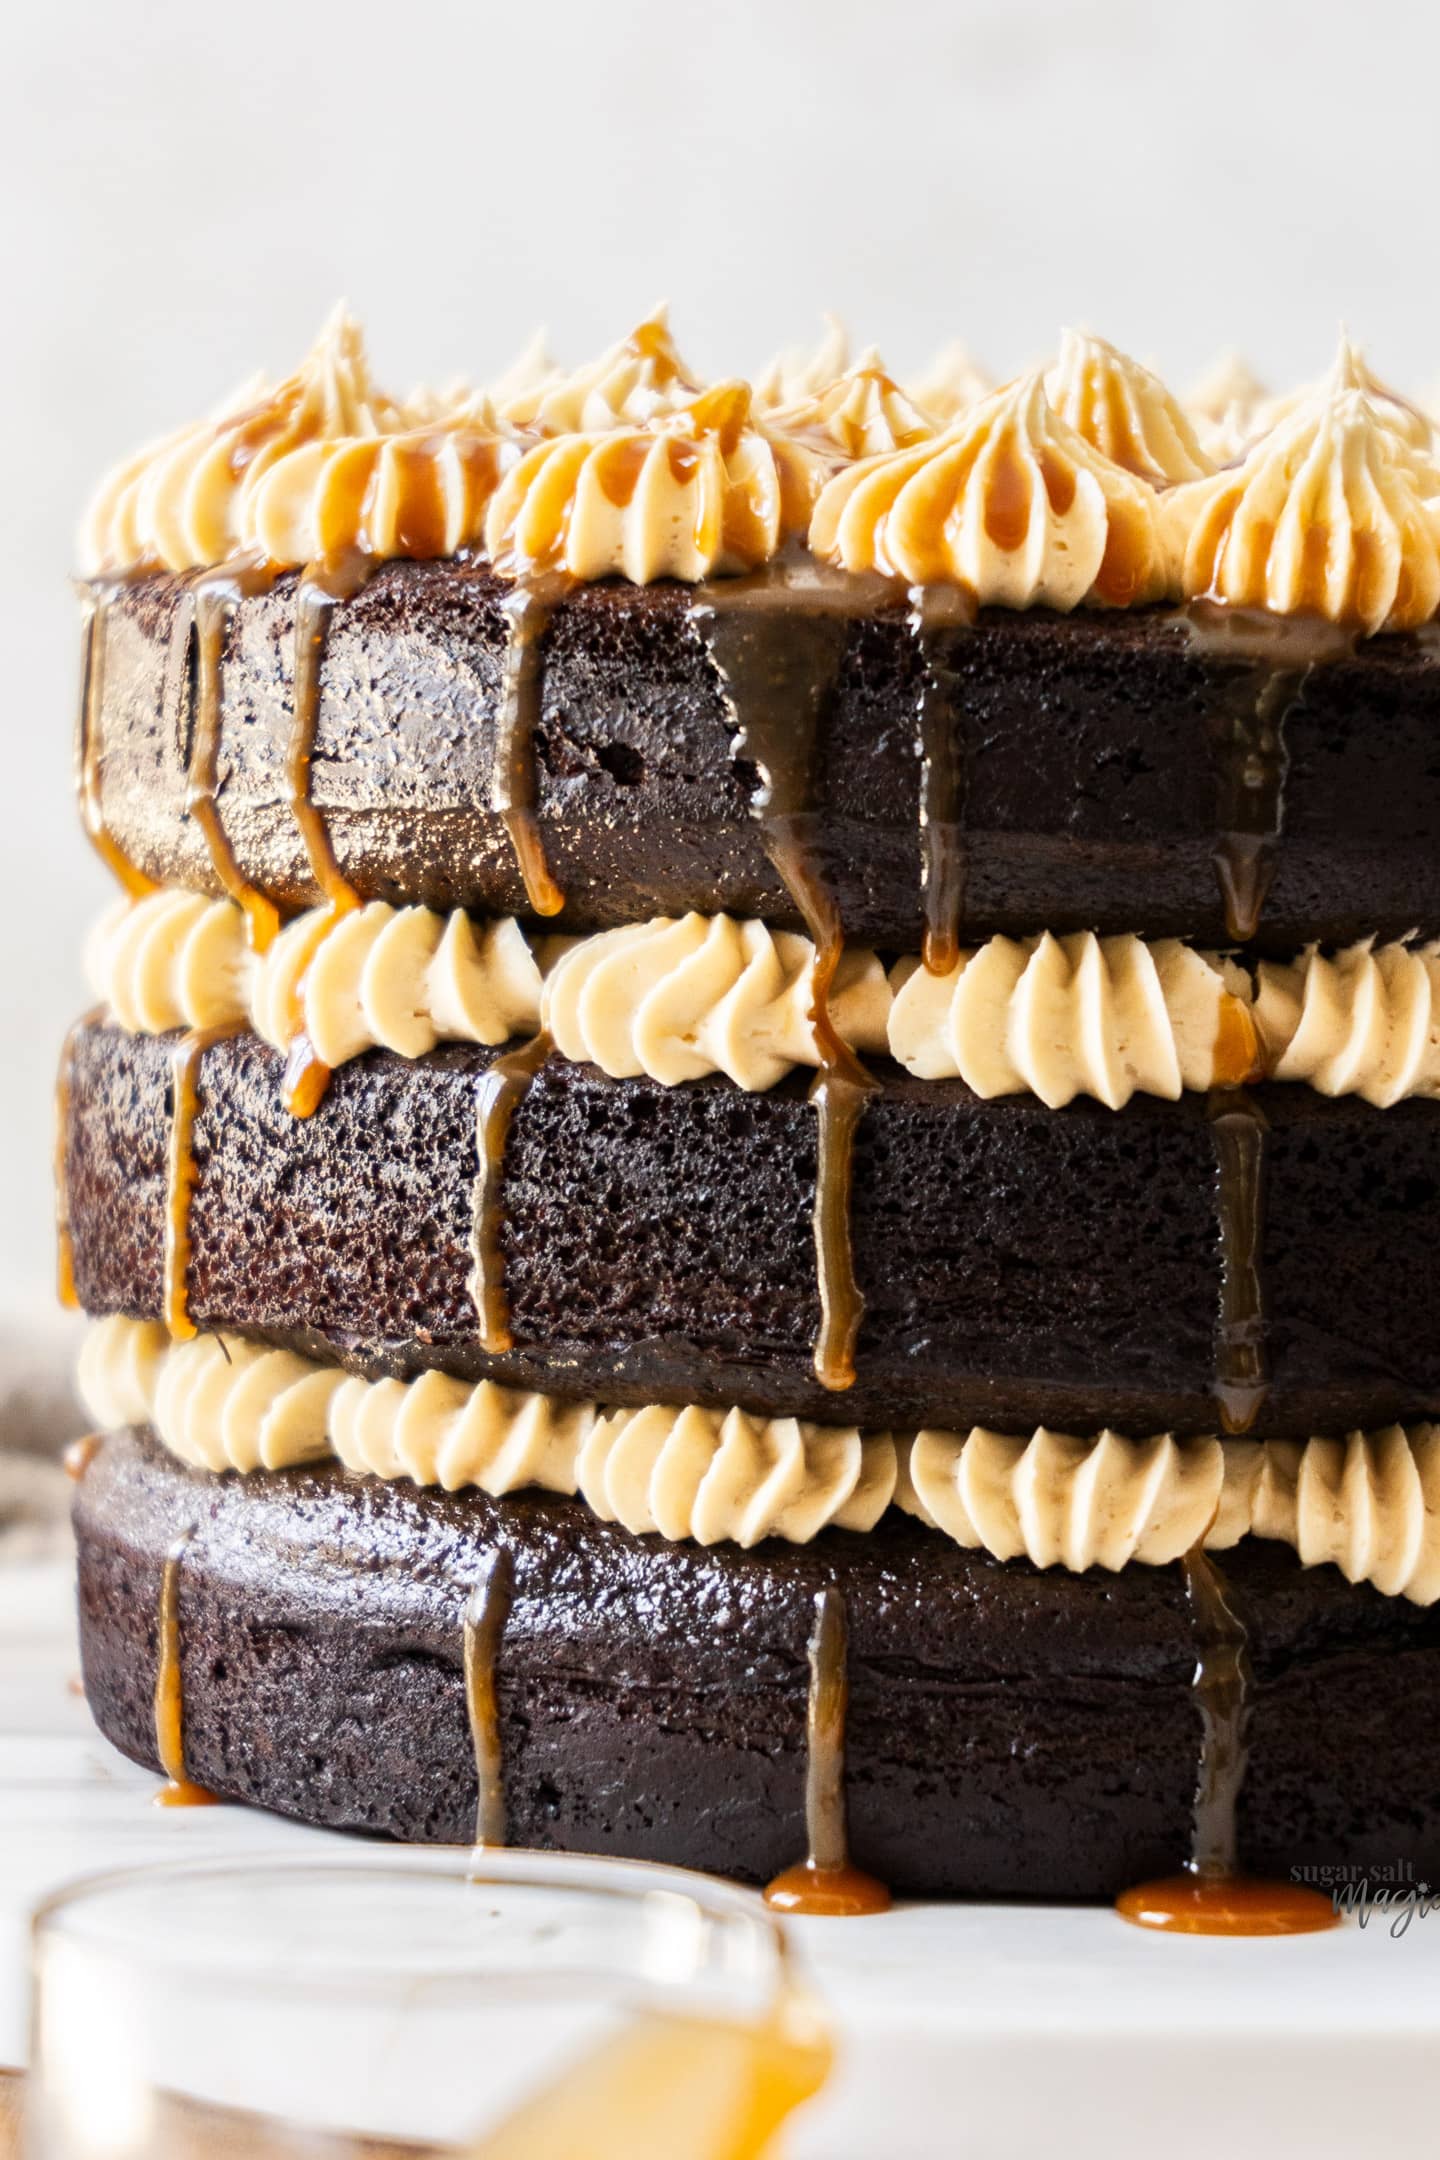 Closeup of the chocolate layer cake.